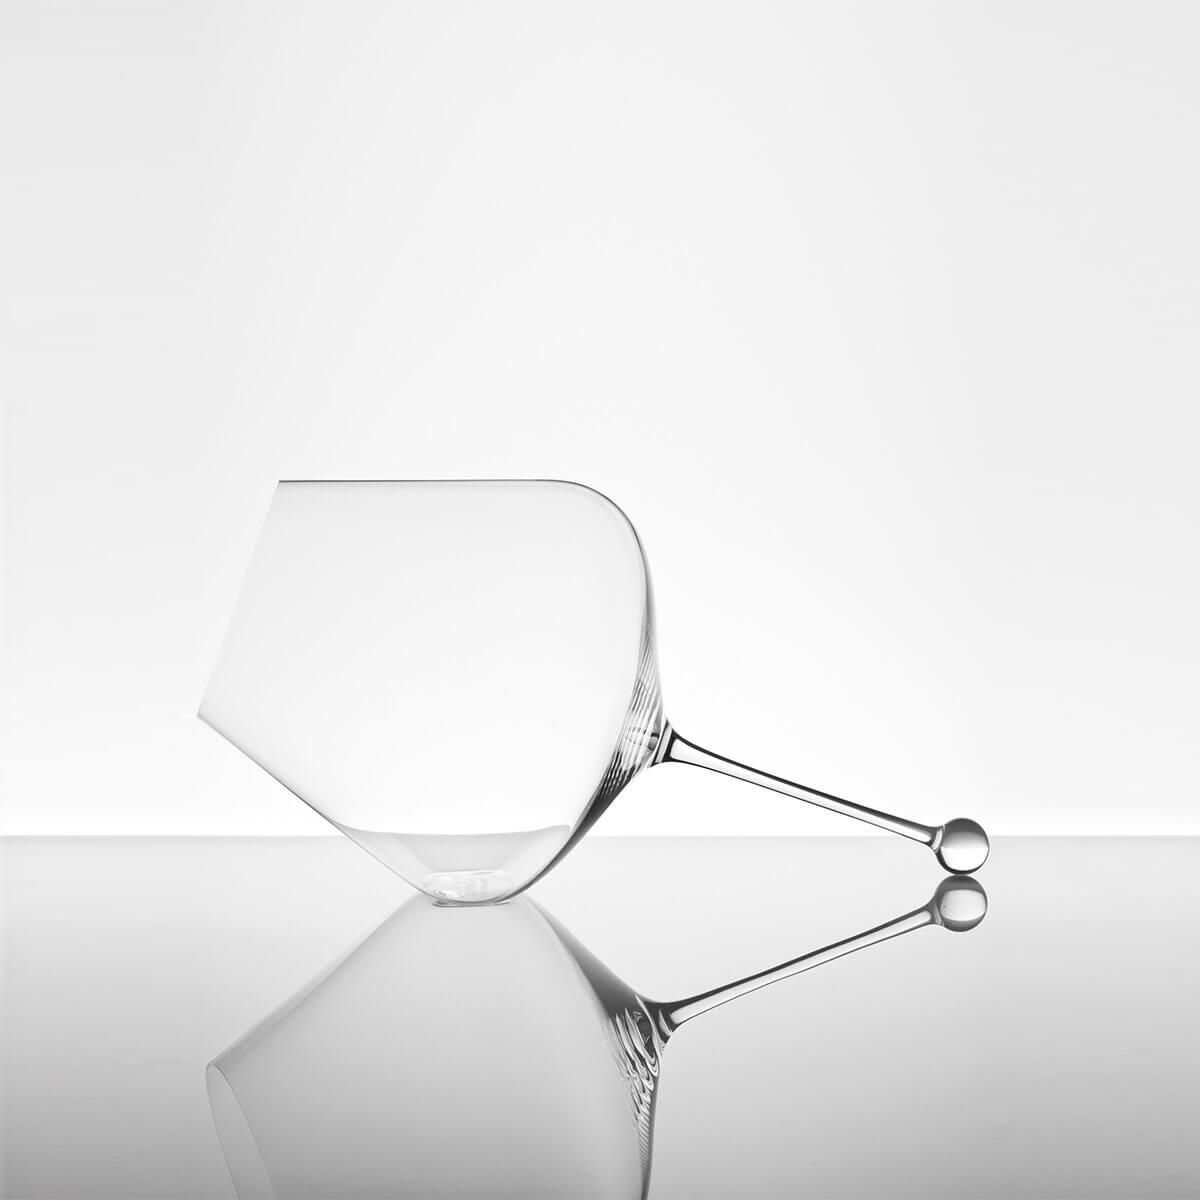 Zalto Universal Wine Glass – Aldo Sohm